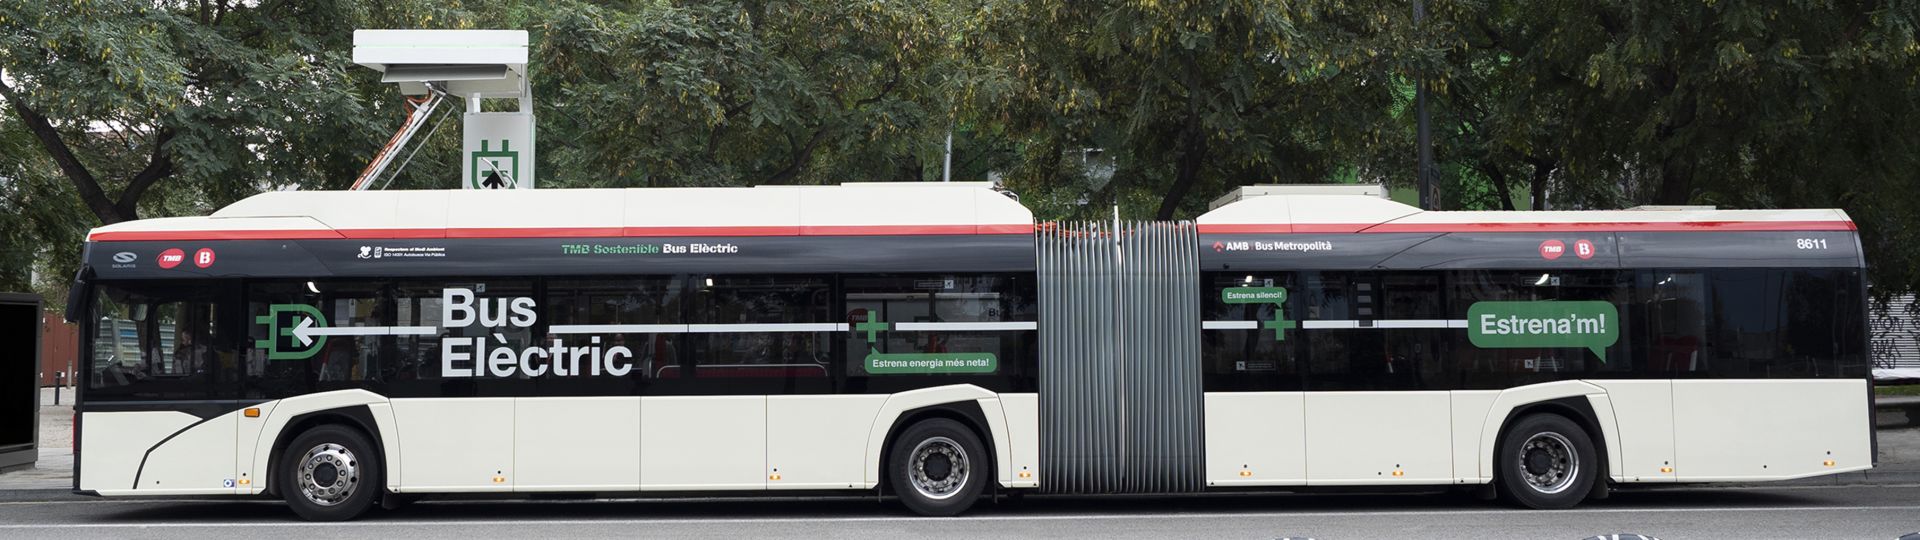 10 million electric kilometres on the odometer of Solaris buses